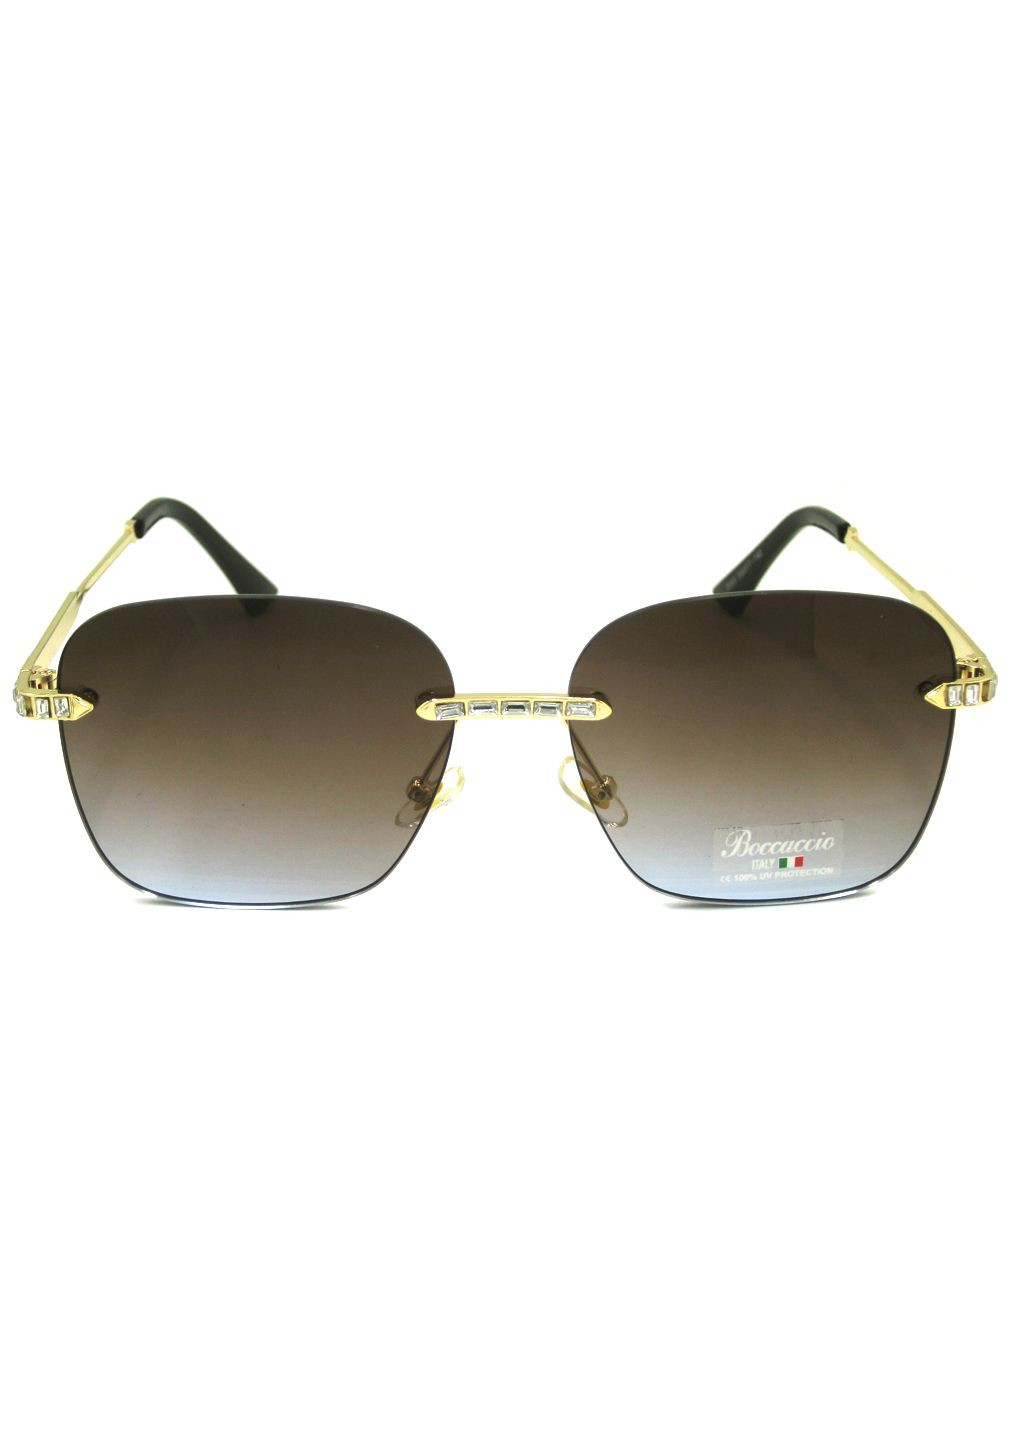 Сонцезахиснi окуляри Boccaccio bc2585 (290417471)